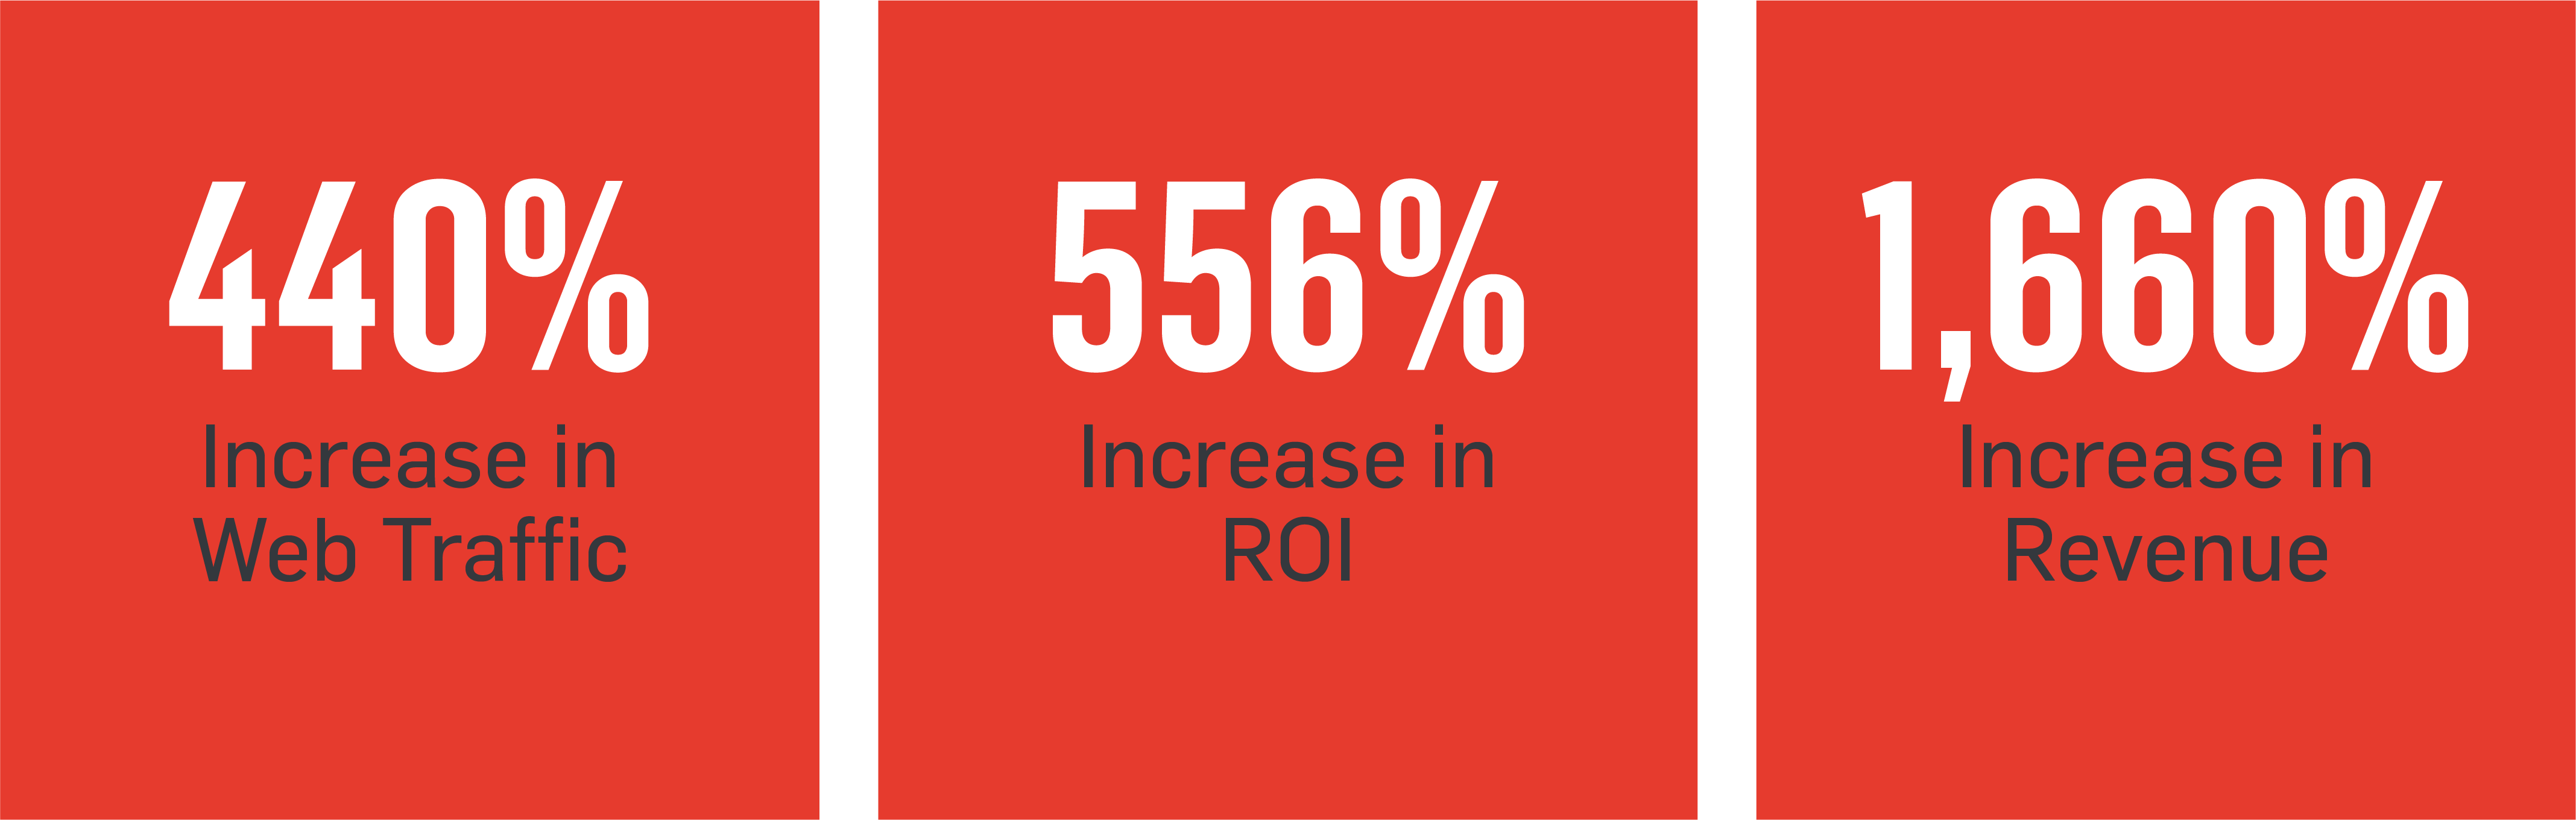 440% Increase in Web Traffic, 556% Increase in ROI, 1,660% Increase in Revenue